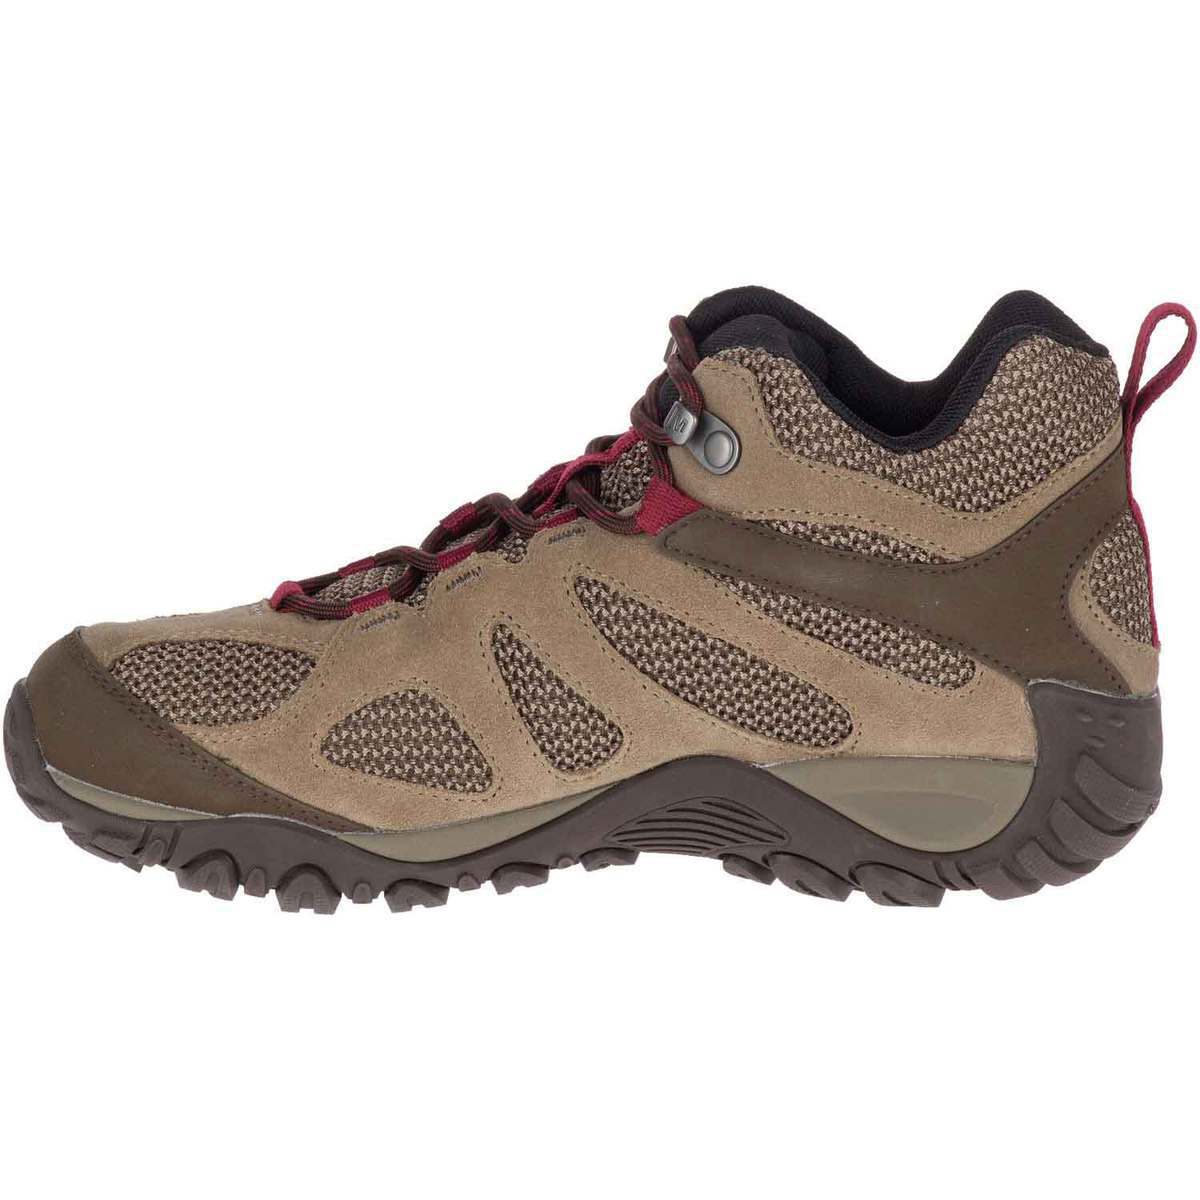 Merrell Women's Yokota Waterproof Mid Hiking Boots - Brindle - Size 7.5 ...